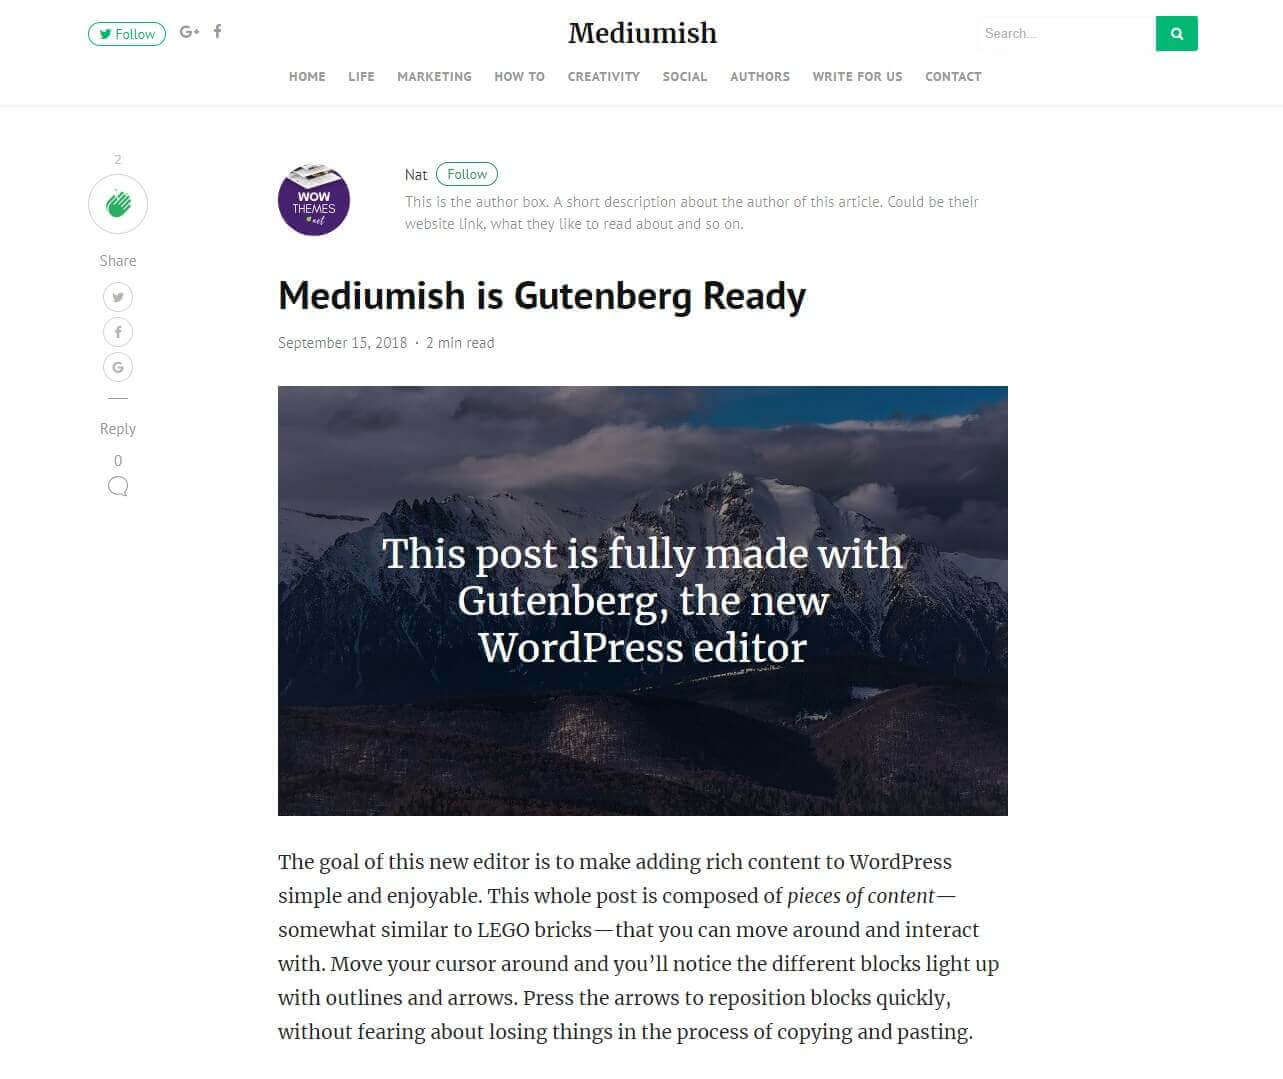 Gutenberg Ready WordPress Themes